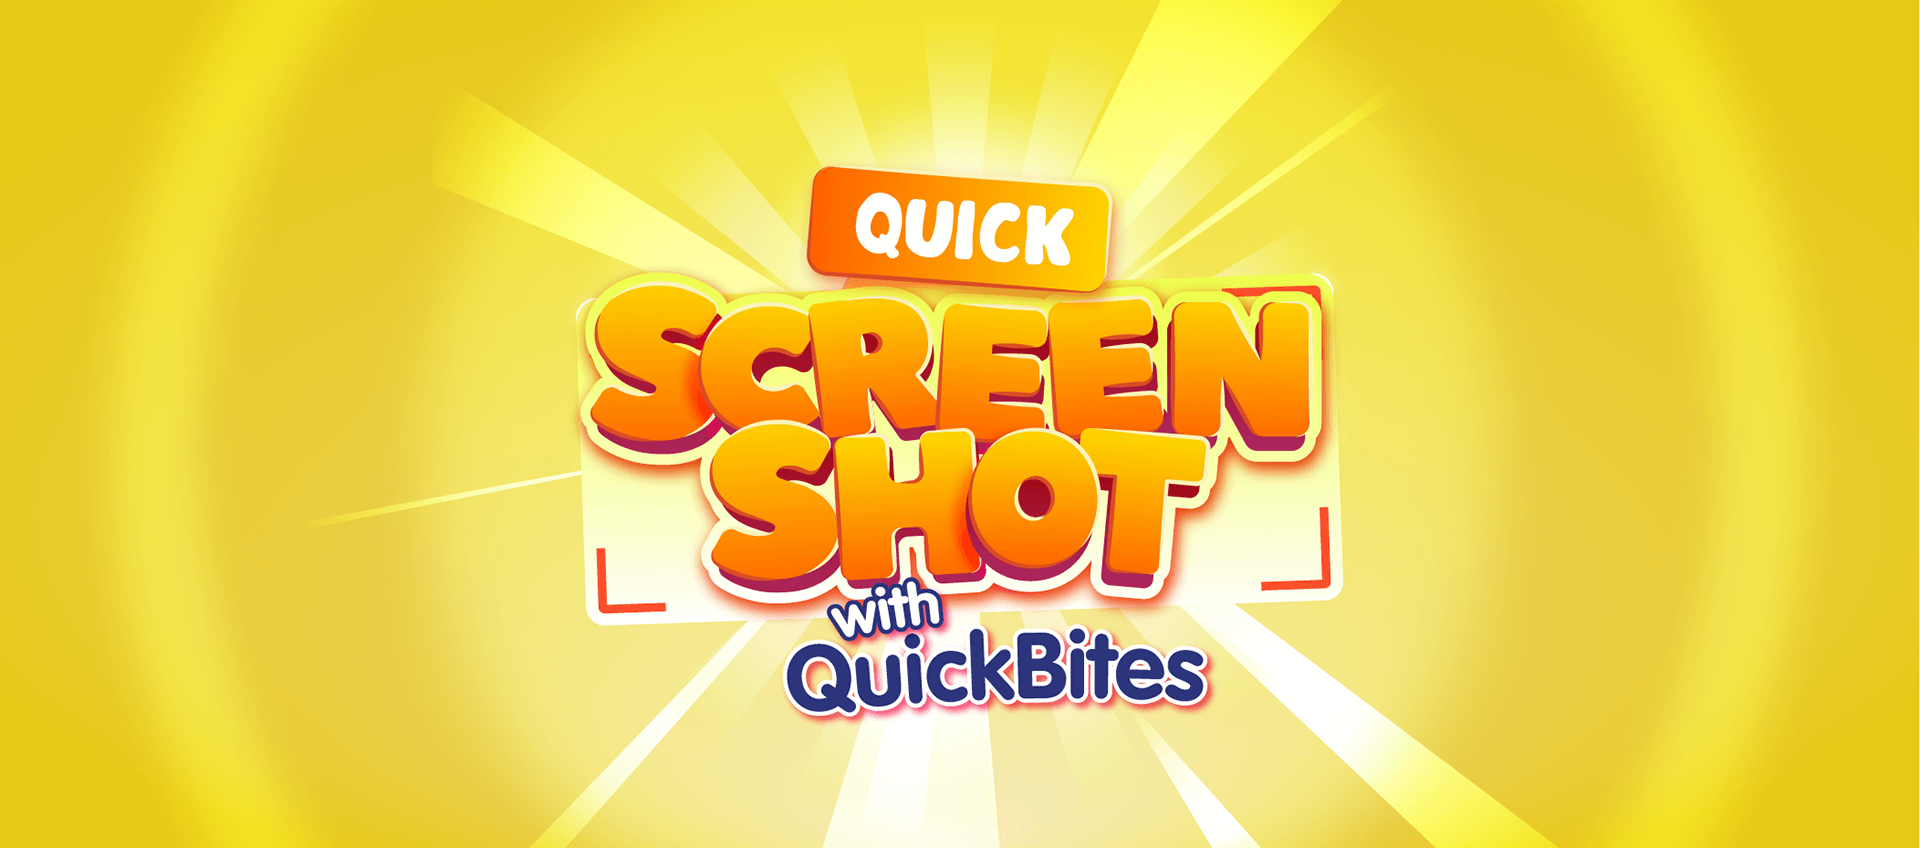 Quick Screenshot with QuickBites